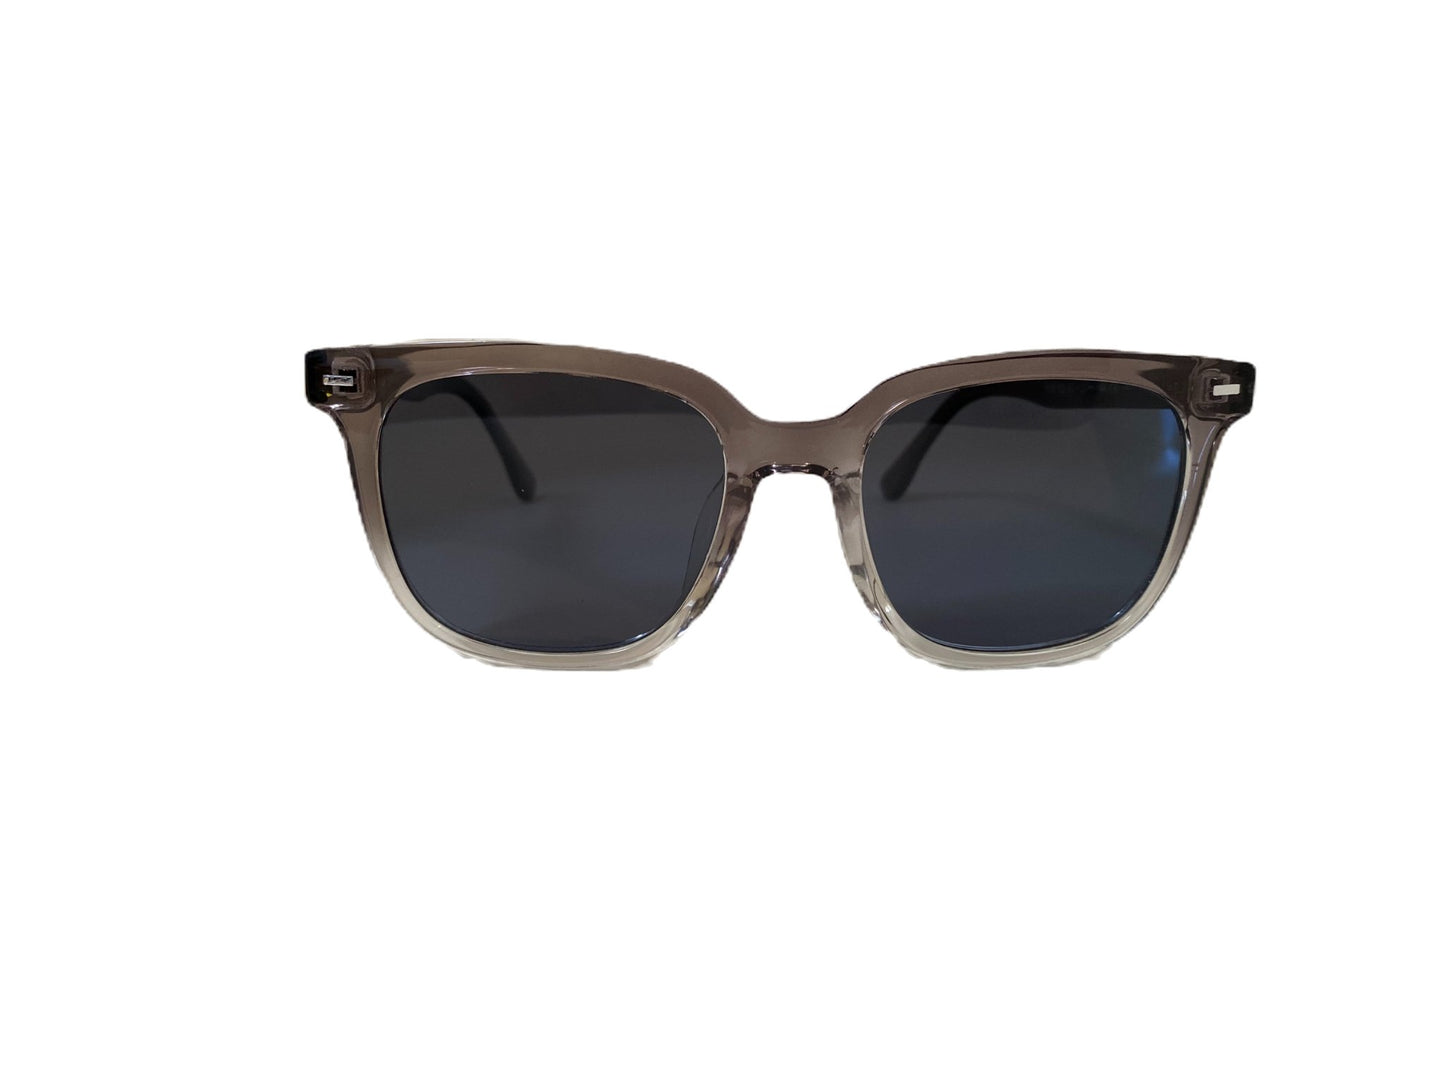 Charcoal Retro Sunglasses - Polarized Acetate Frame Glasses - Eques Timepieces